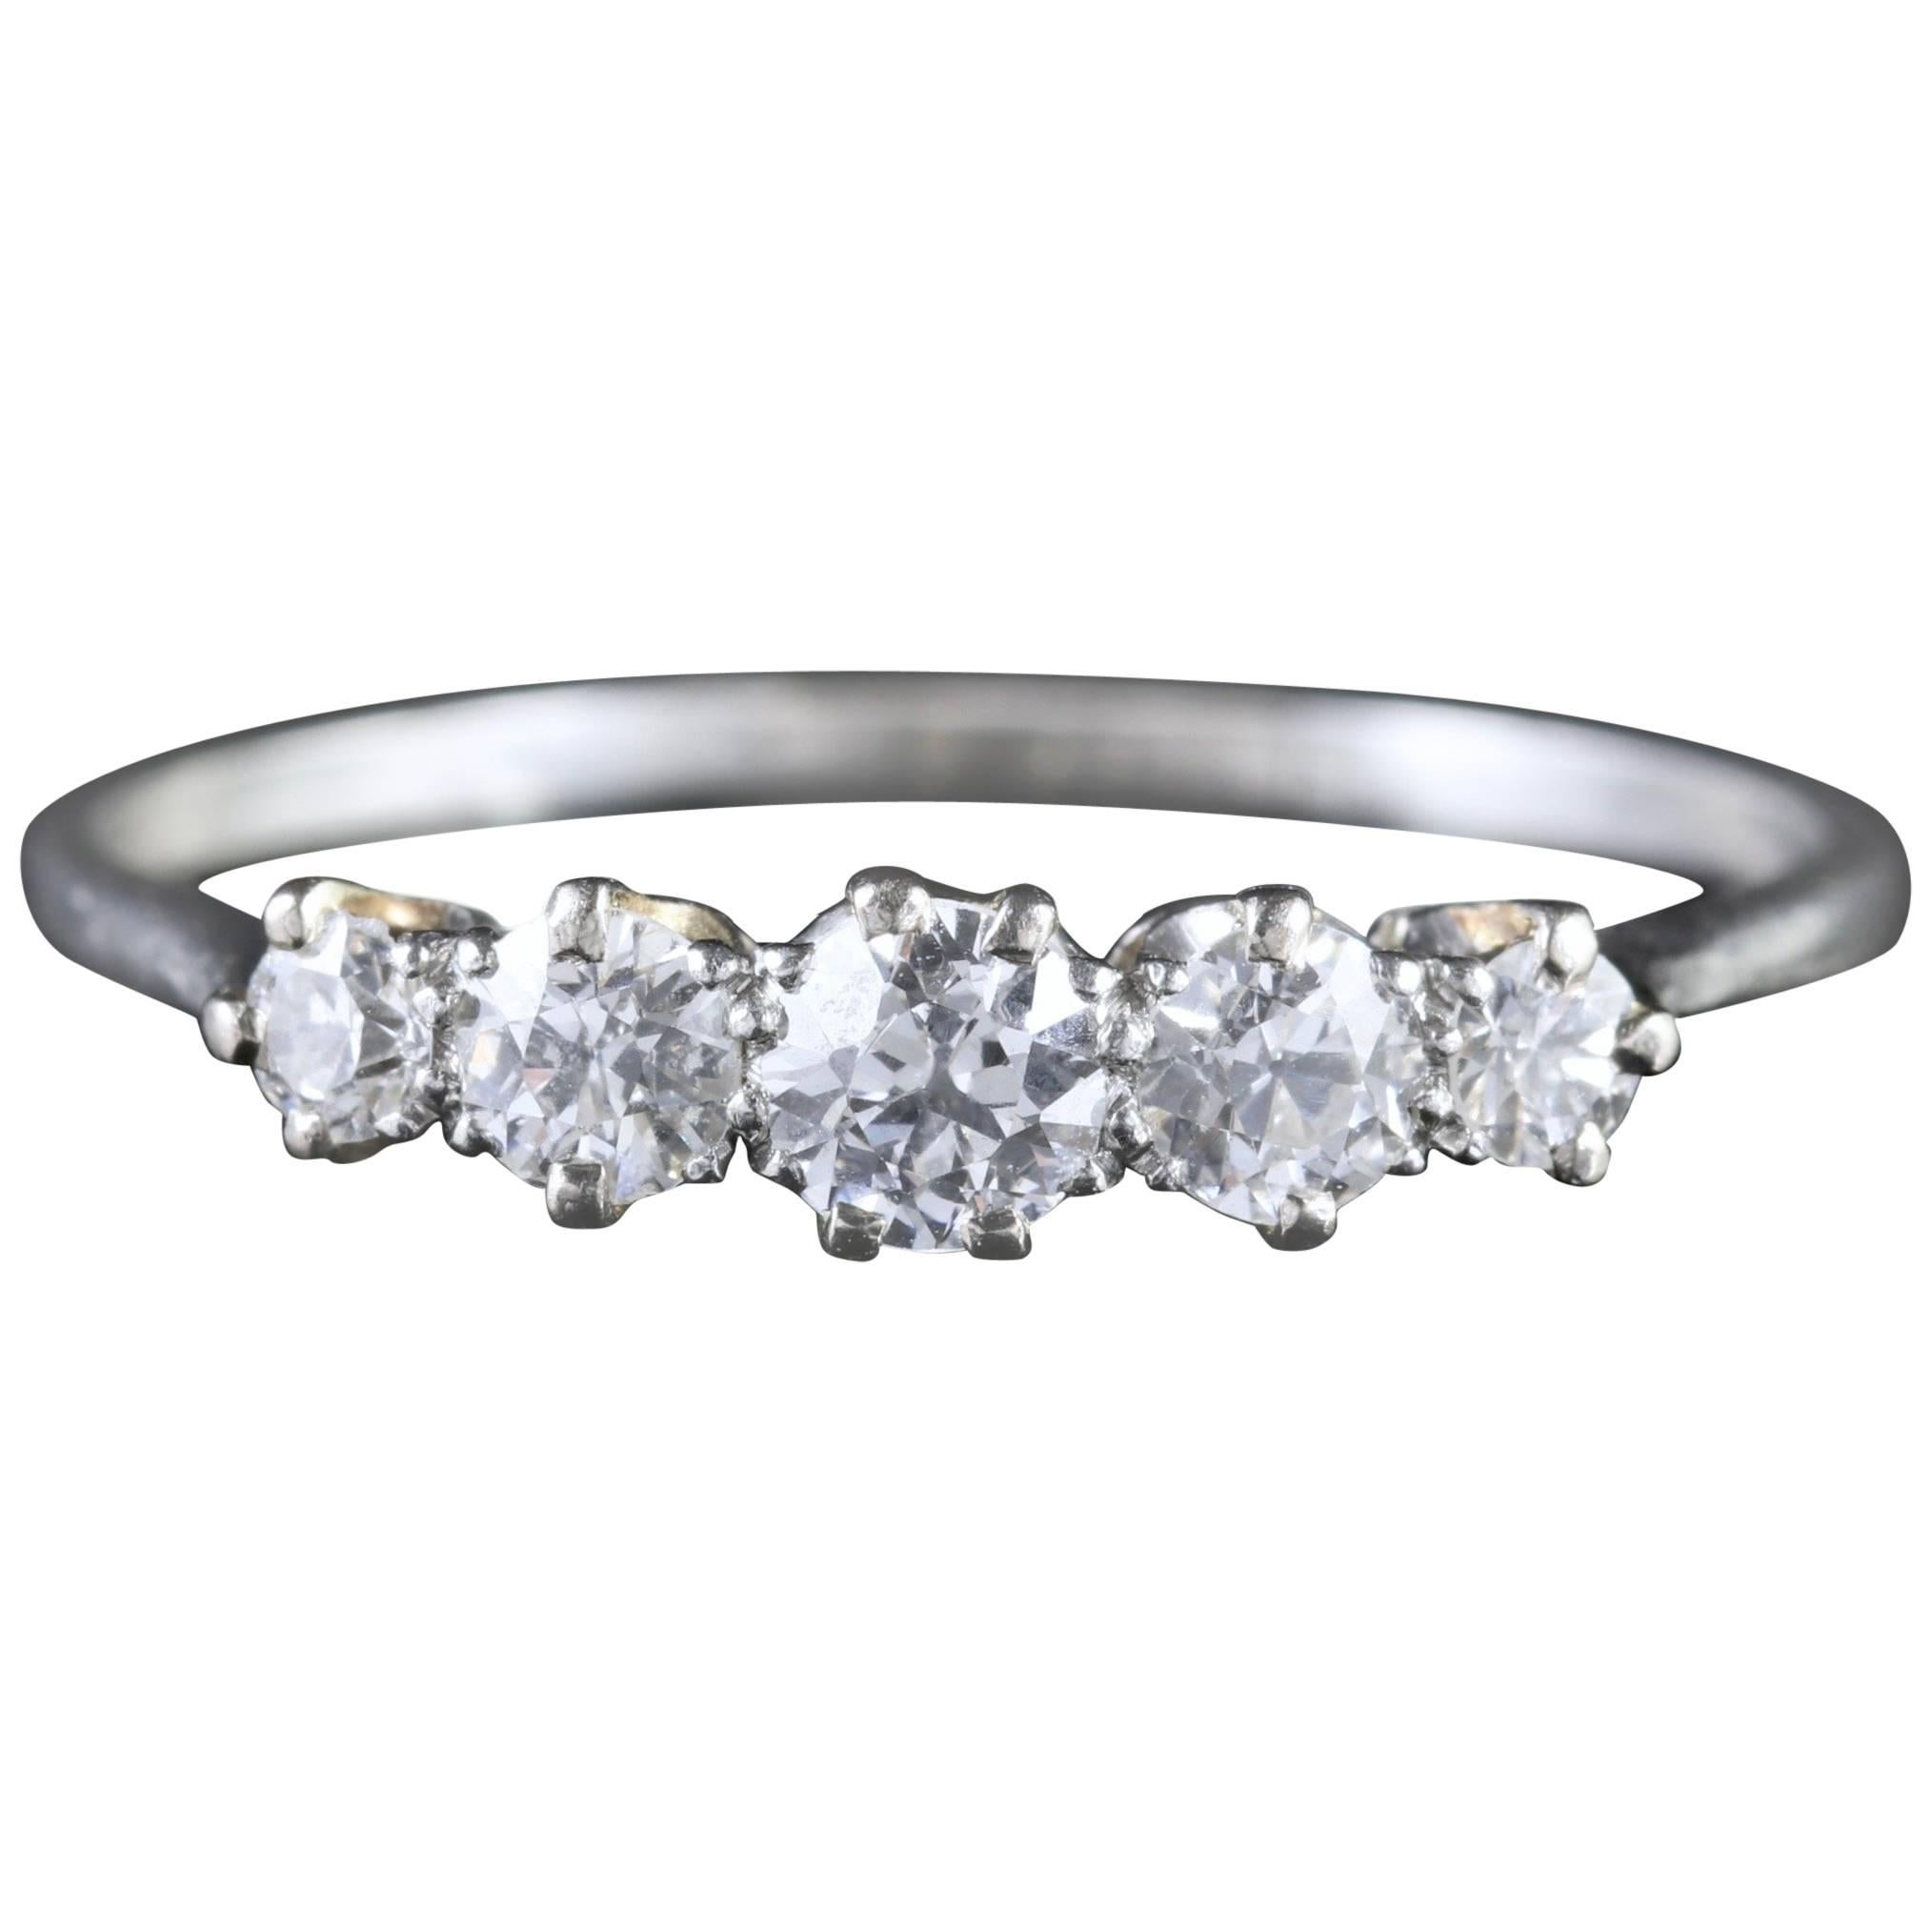 Antique Edwardian Five-Stone Diamond Eternity Ring 18 Carat White Gold